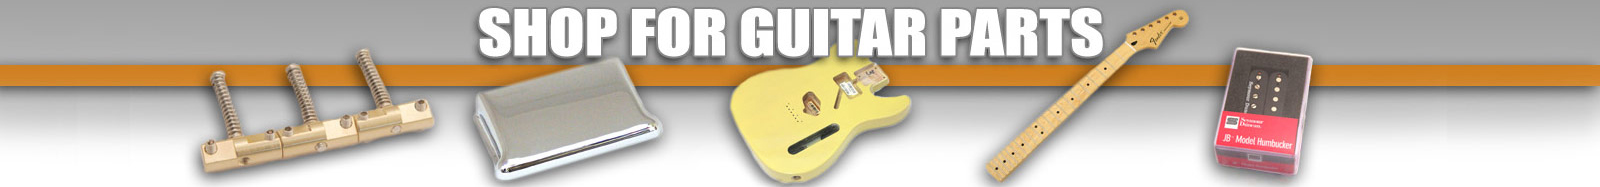 Guitar parts banner	